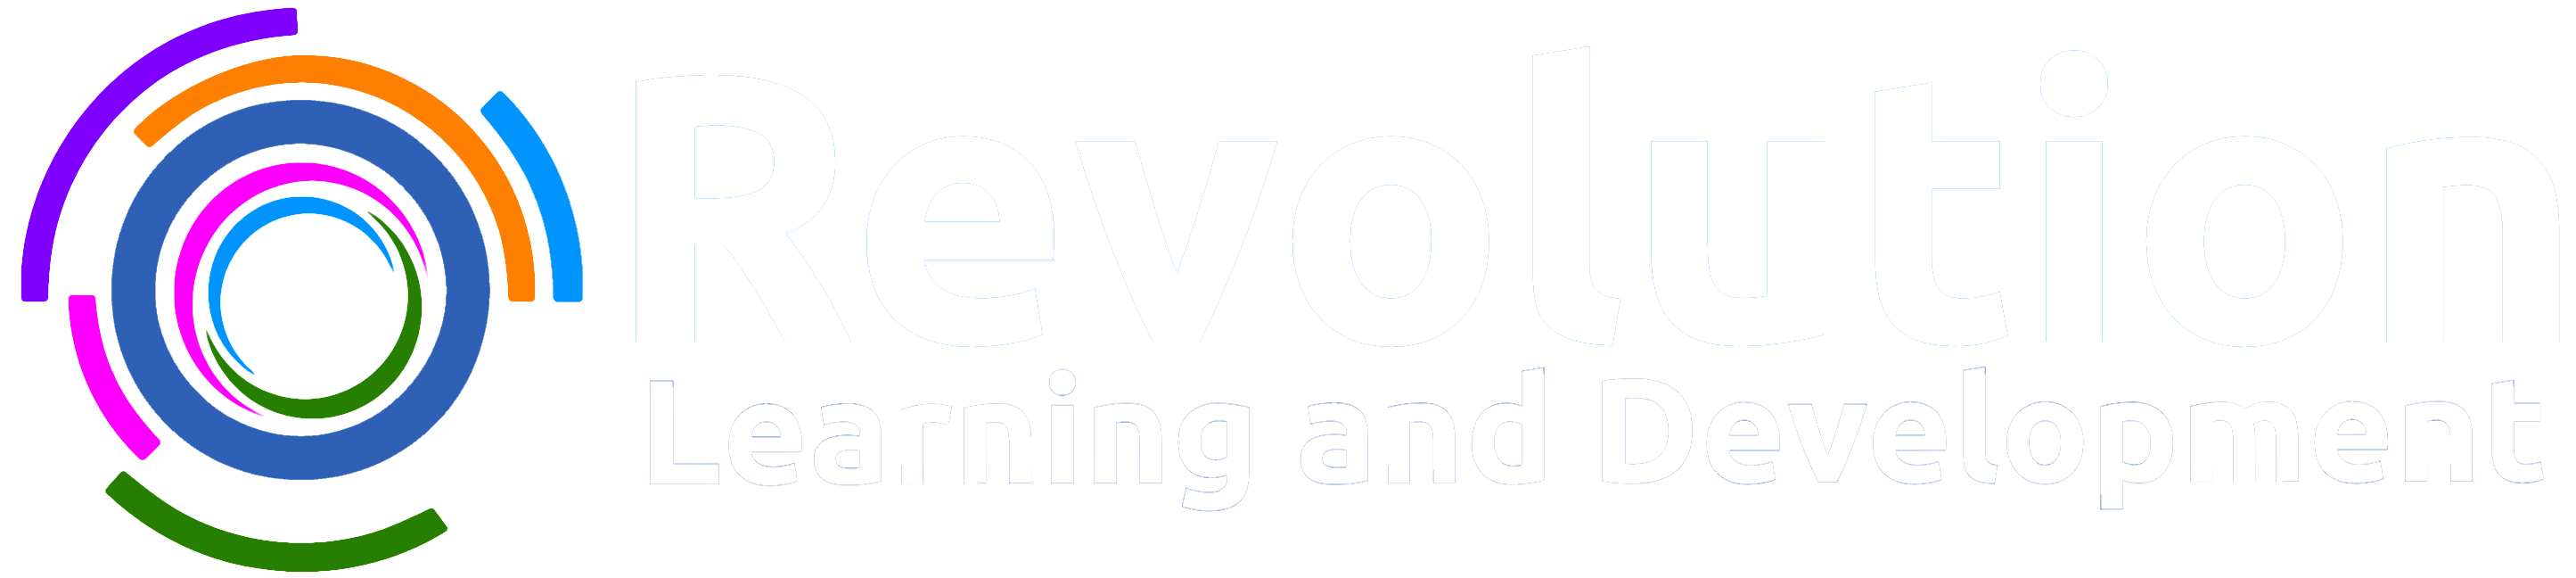 Revolution Learning and Development – Belgium